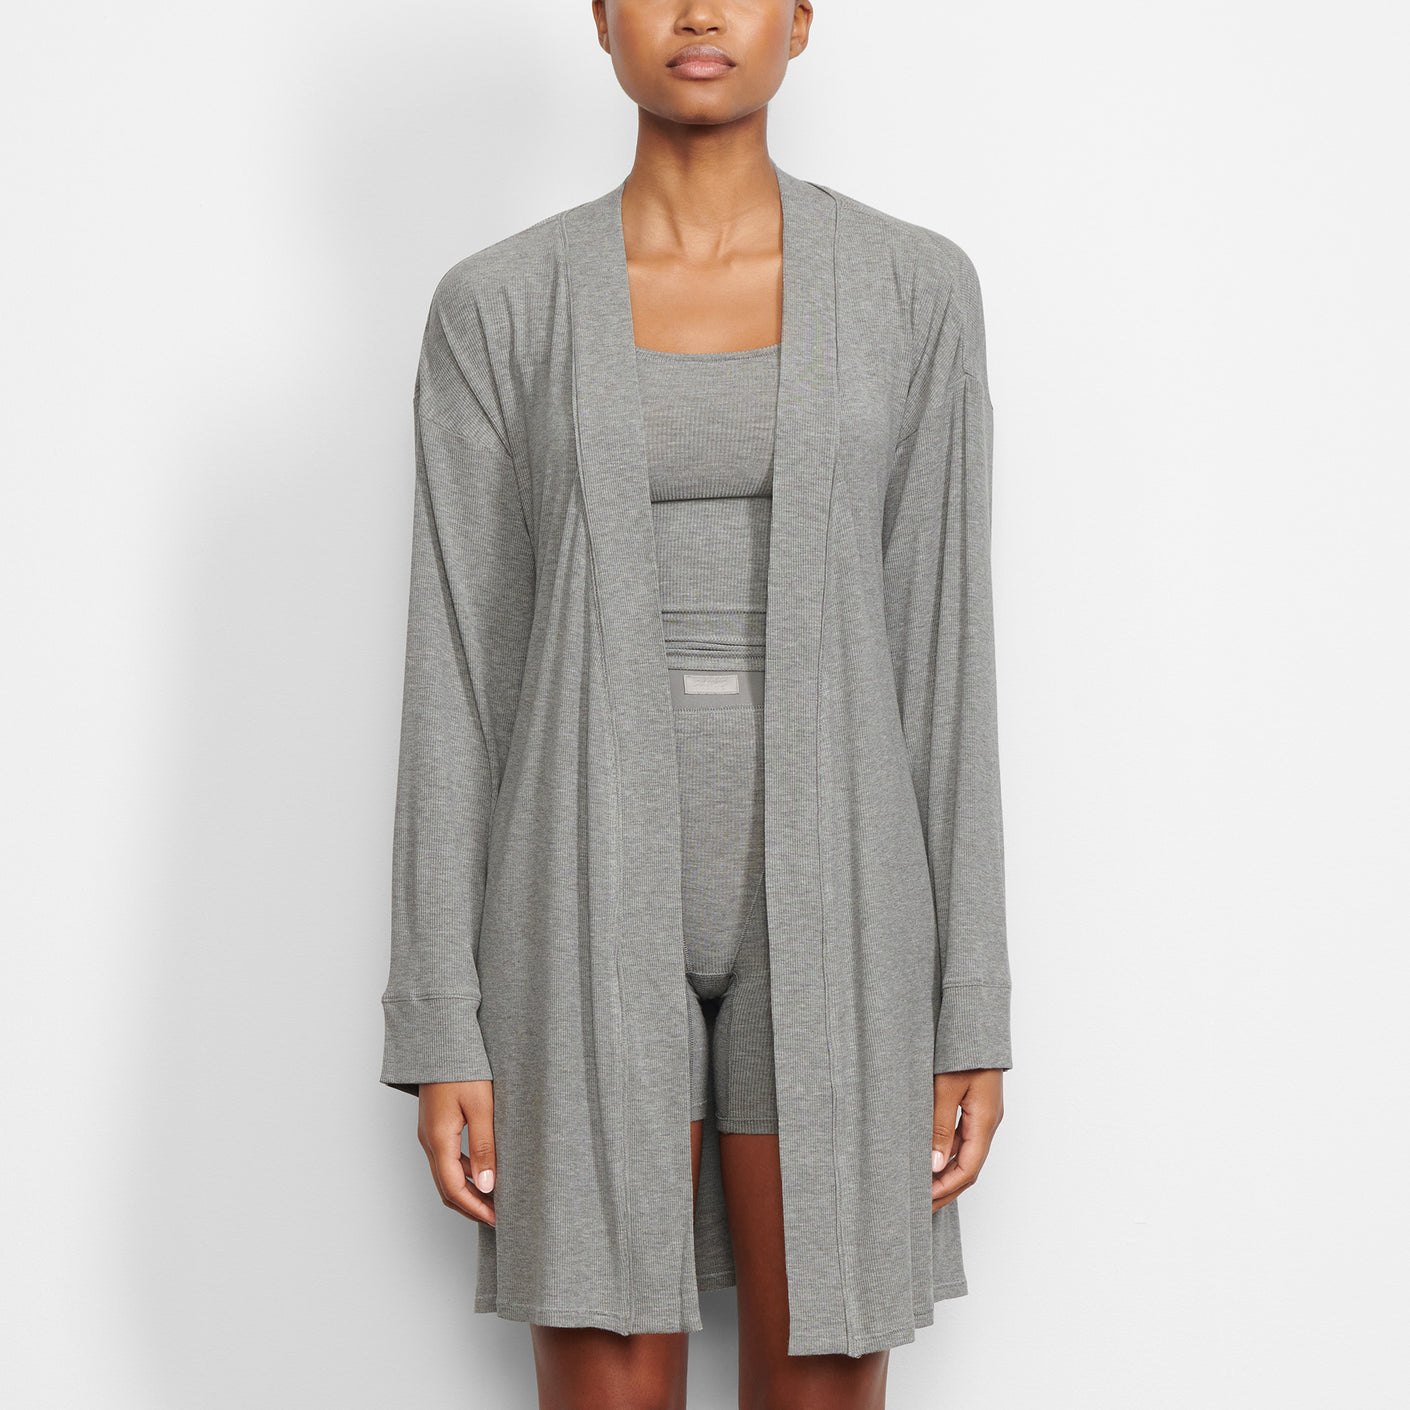 NWT- Skims Soft Lounge Long Sleeve Dress Heather Grey/ Size S /(AP